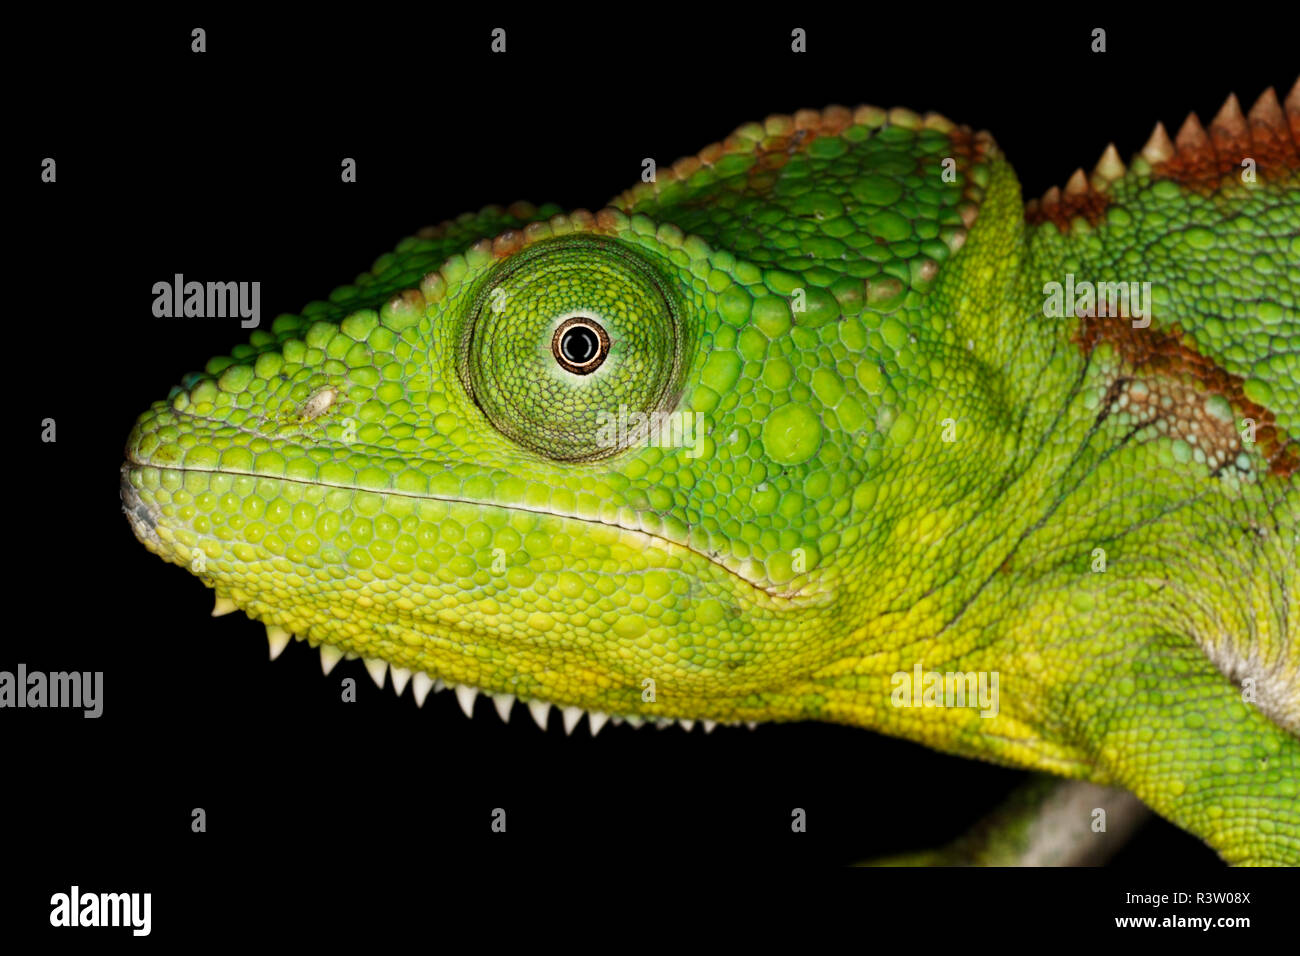 Malagasy giant chameleon or Oustalets's chameleon, Furcifer oustaleti, native to Madagascar Stock Photo